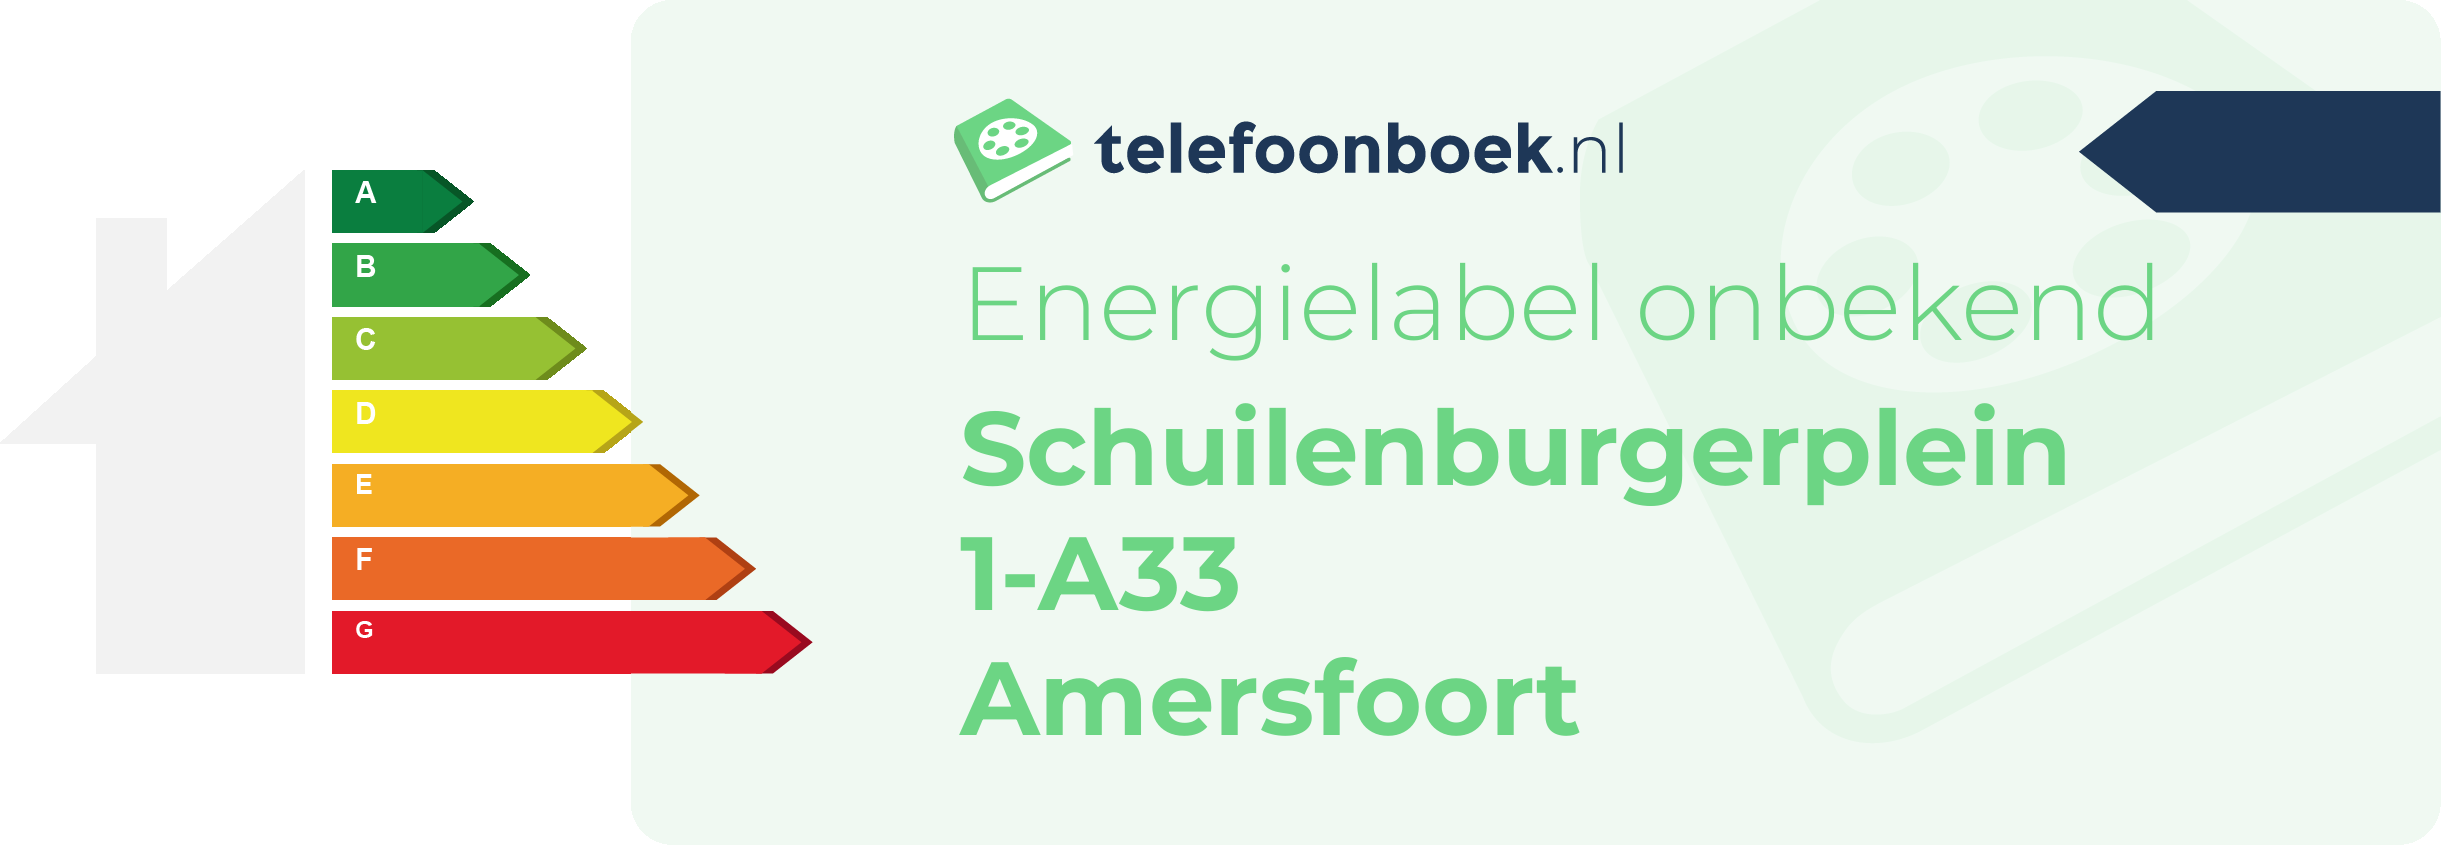 Energielabel Schuilenburgerplein 1-A33 Amersfoort